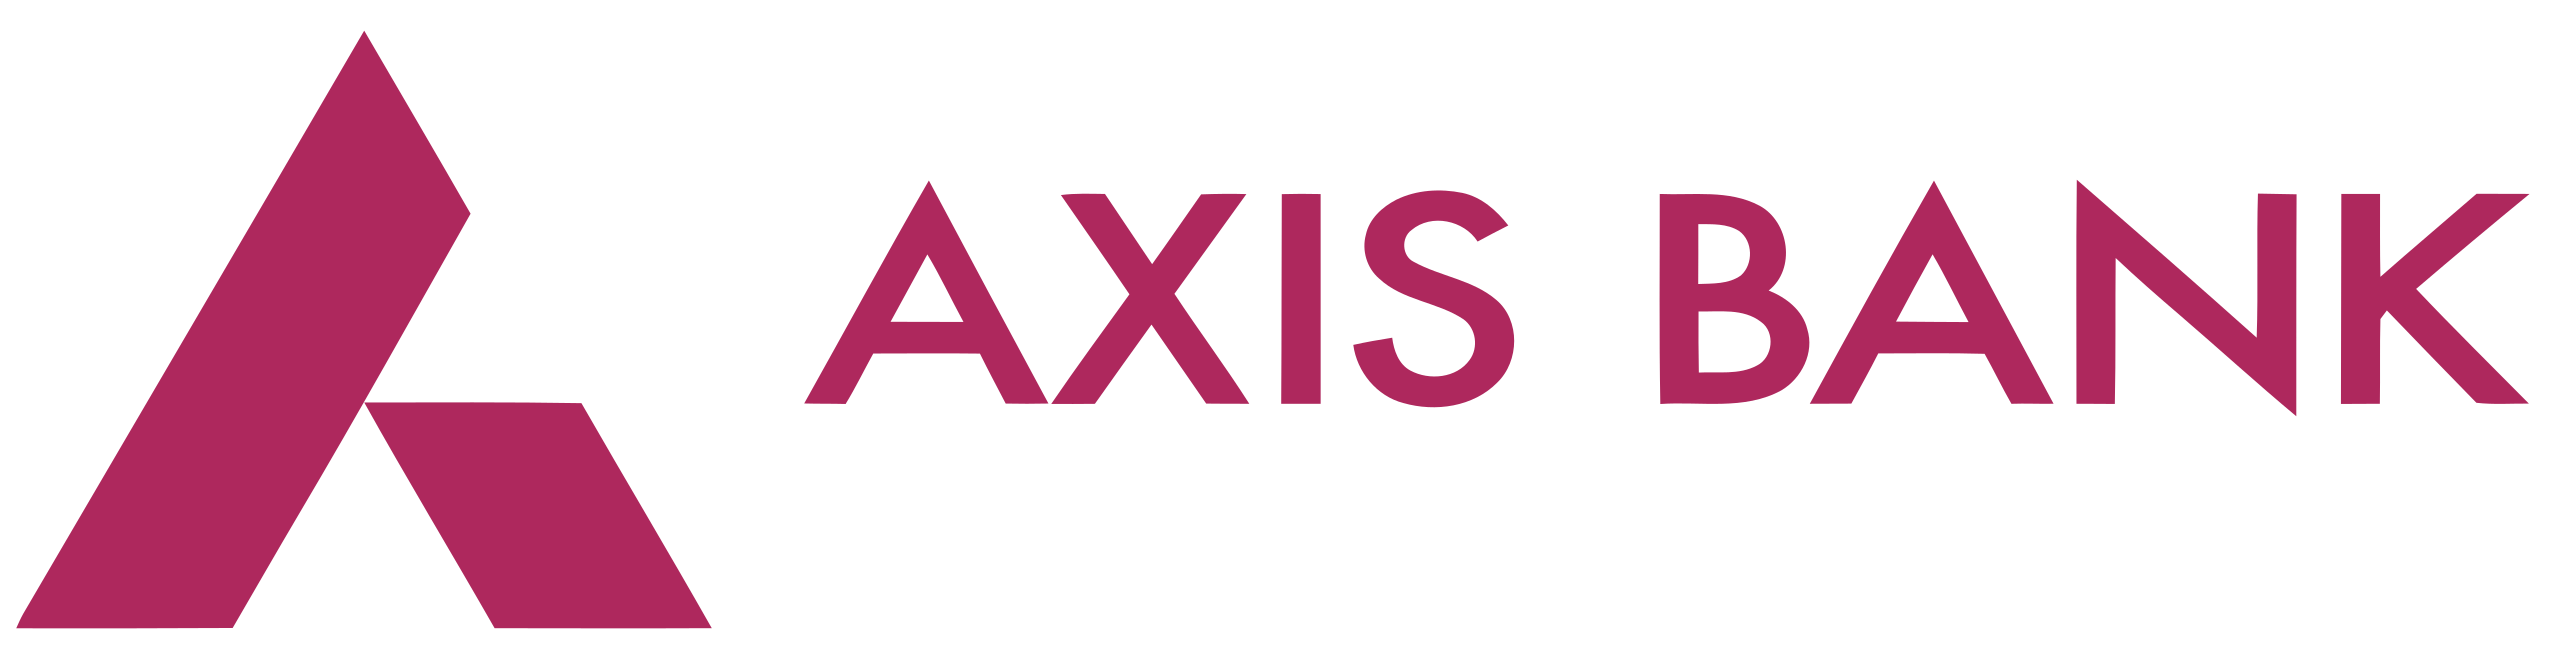 Axix Bank